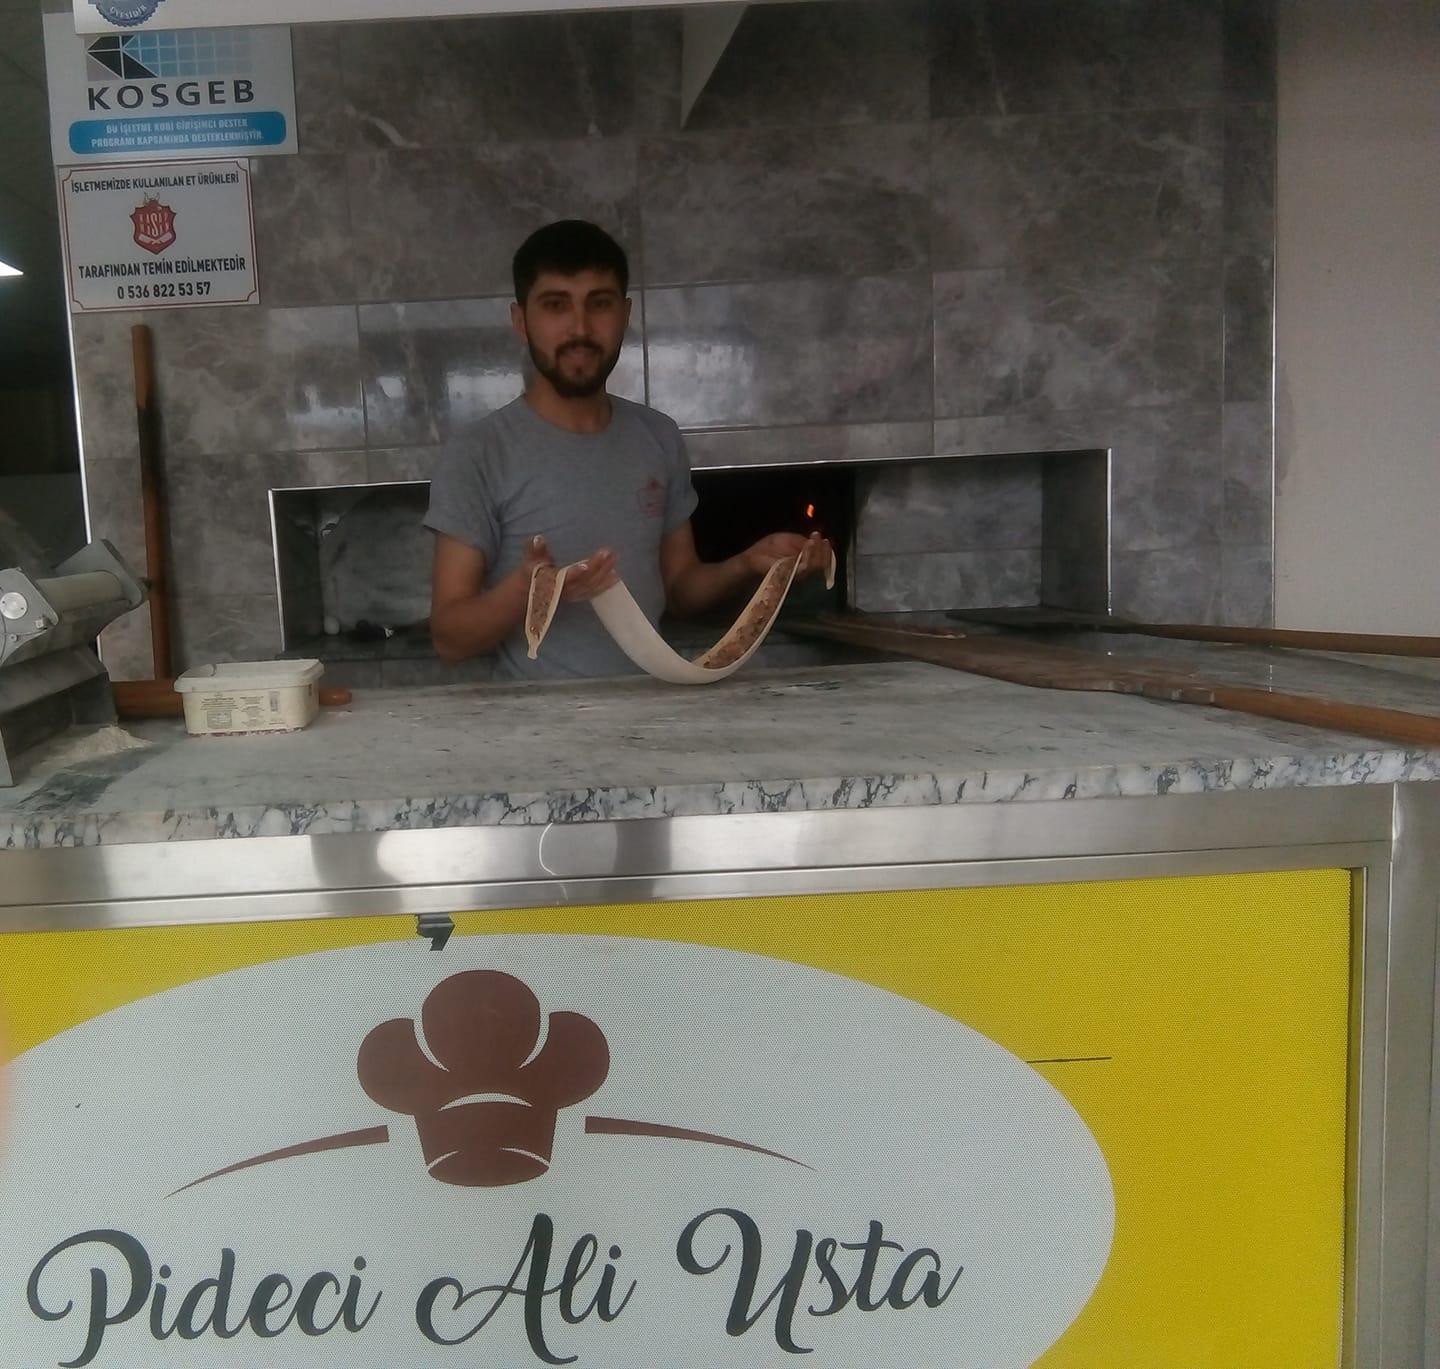 Pideci Ali Usta Denizli Restaurant Reviews